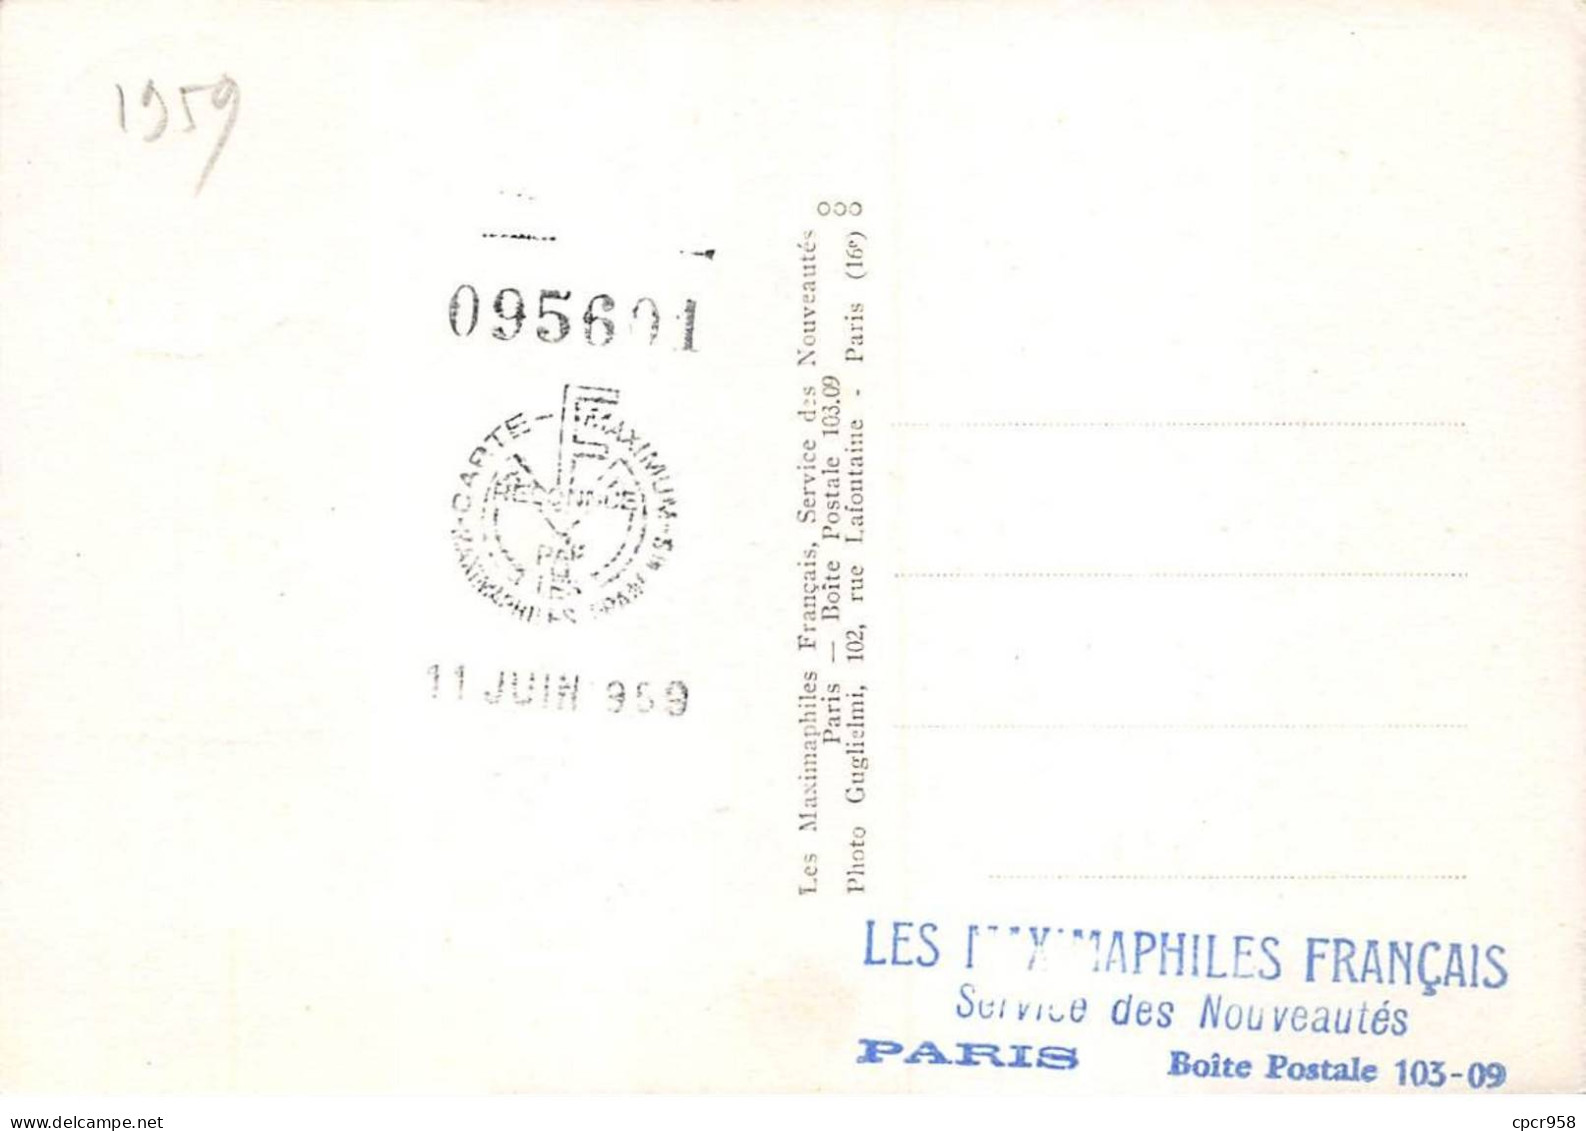 Carte Maximum - ALGERIE -  COR12732 - 23/05/1959 - Barrage De FOUM EL GHERZA -  Cachet Biskra - Altri - Africa